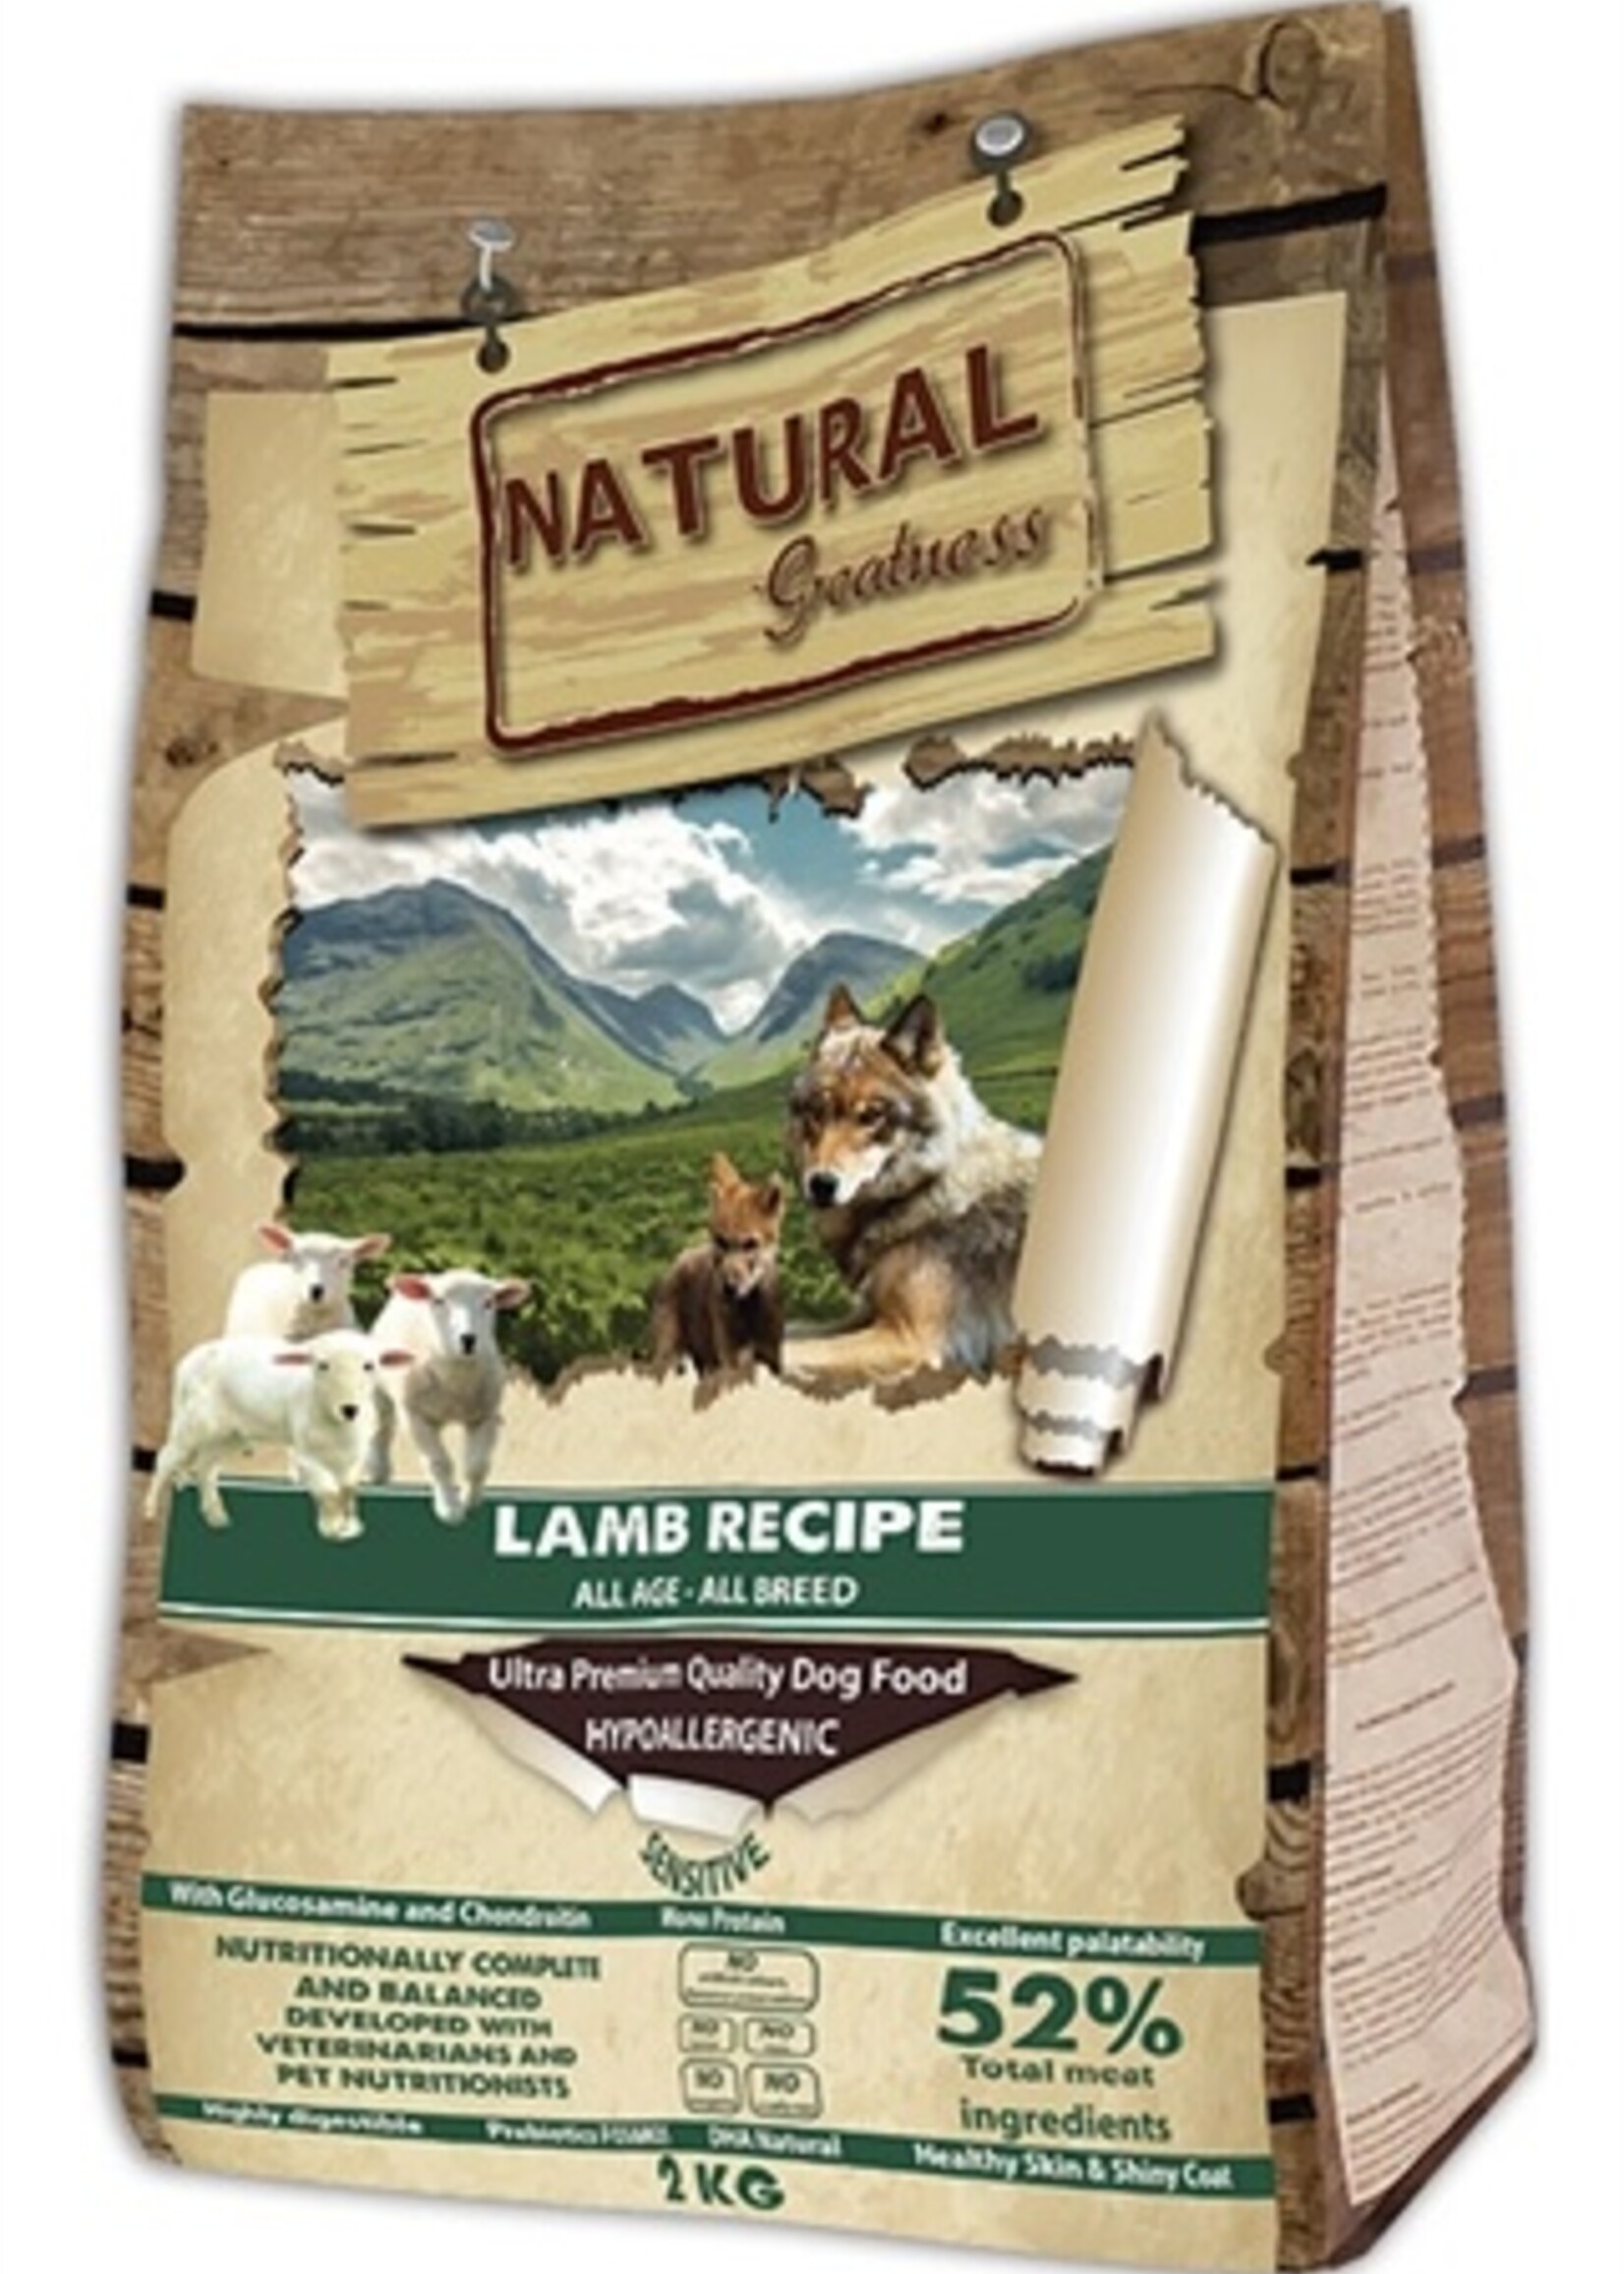 Natural greatness Natural greatness lamb recipe